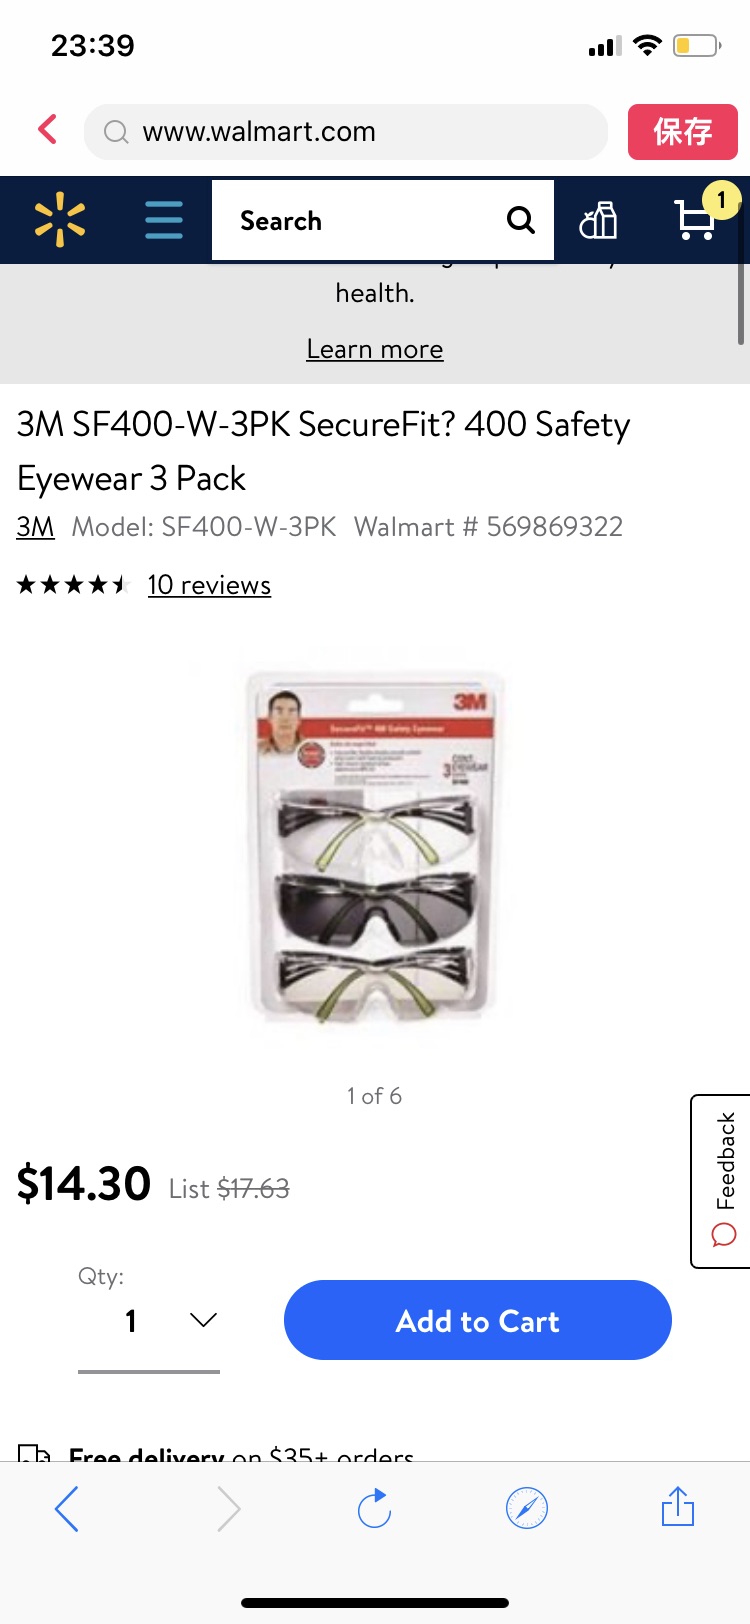 3M SF400-W-3PK SecureFit? 400 Safety Eyewear 3 Pack - Walmart.com - 护目镜